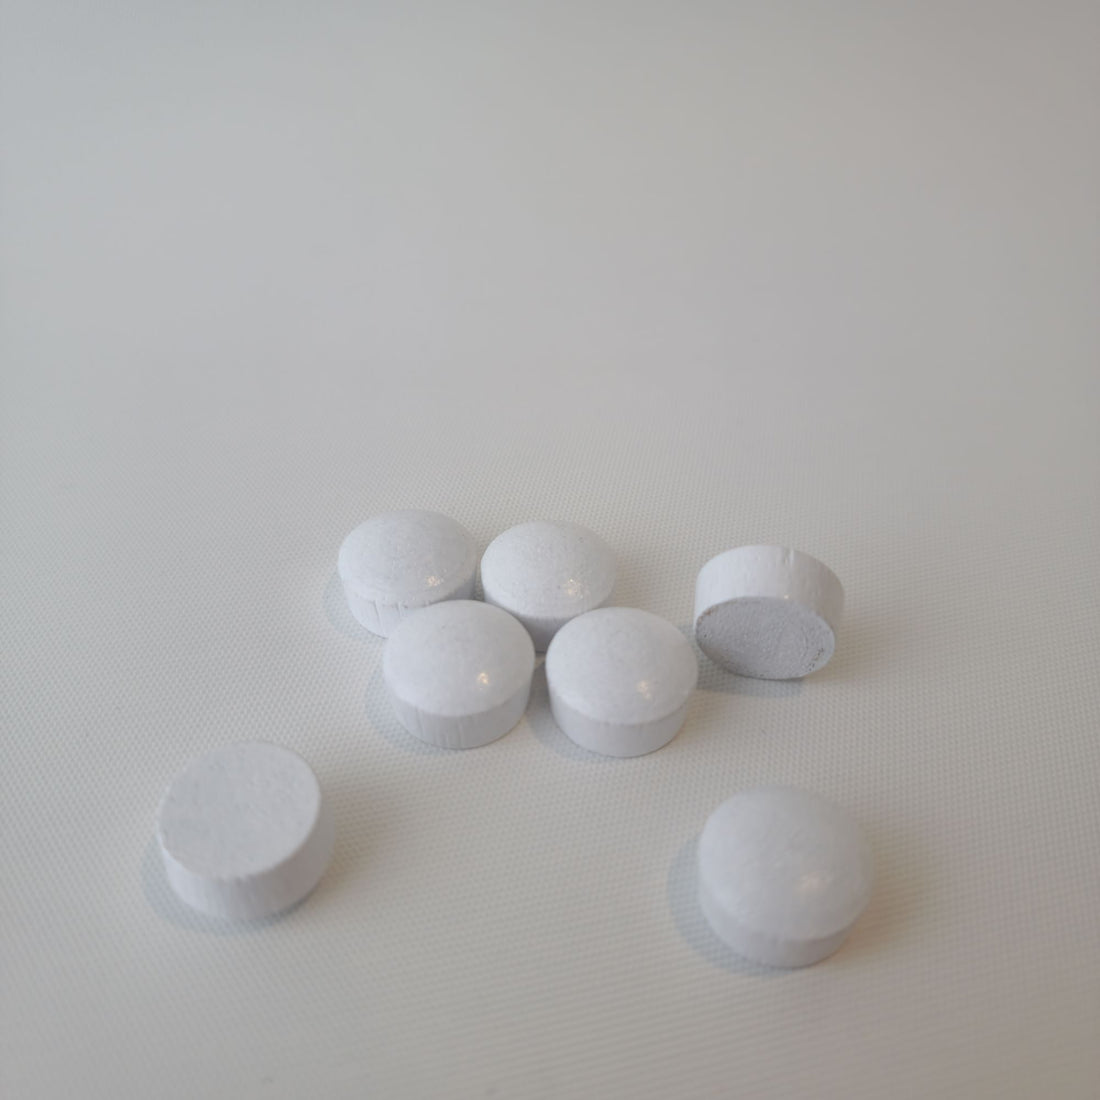 Venetian Blind wooden buttons - set of 10 - white